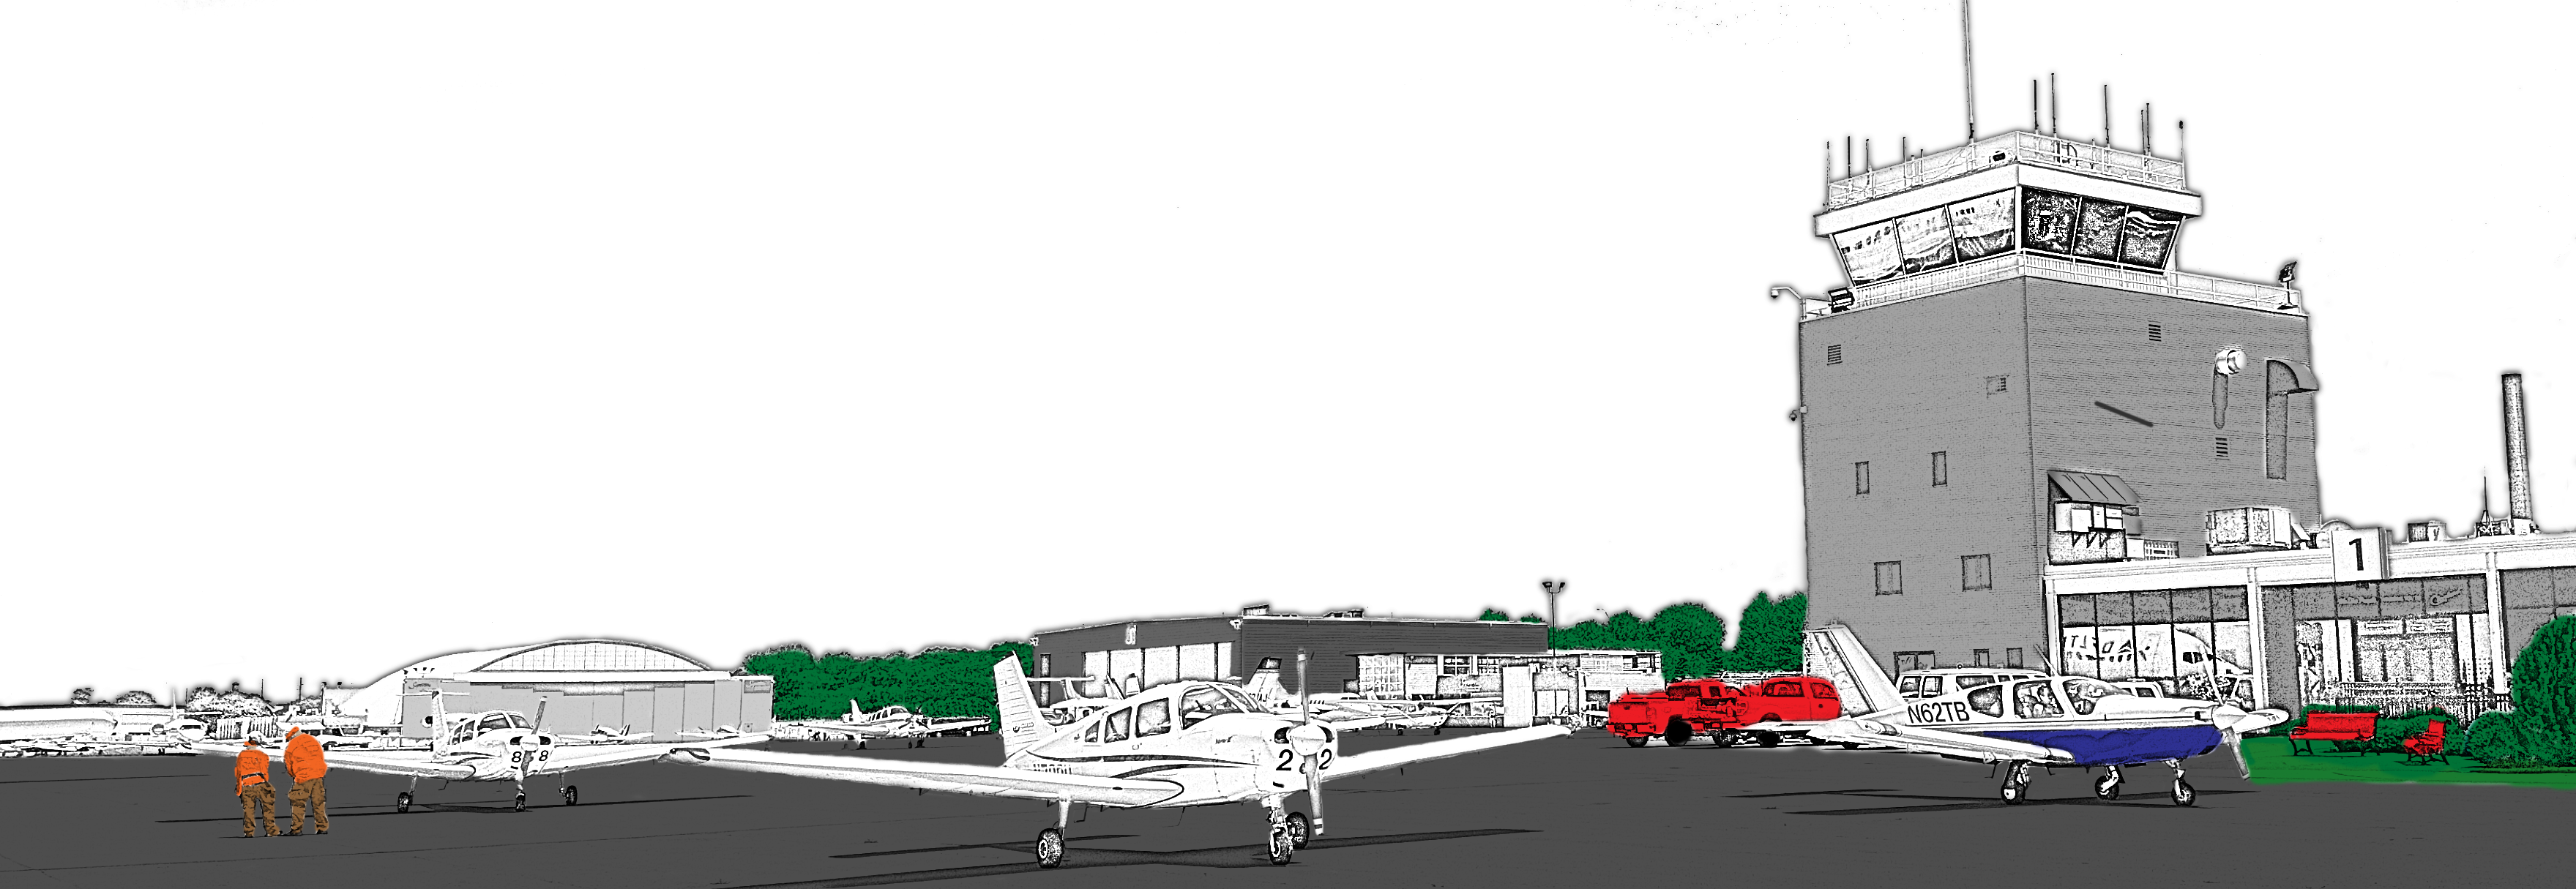 hangar cartoon